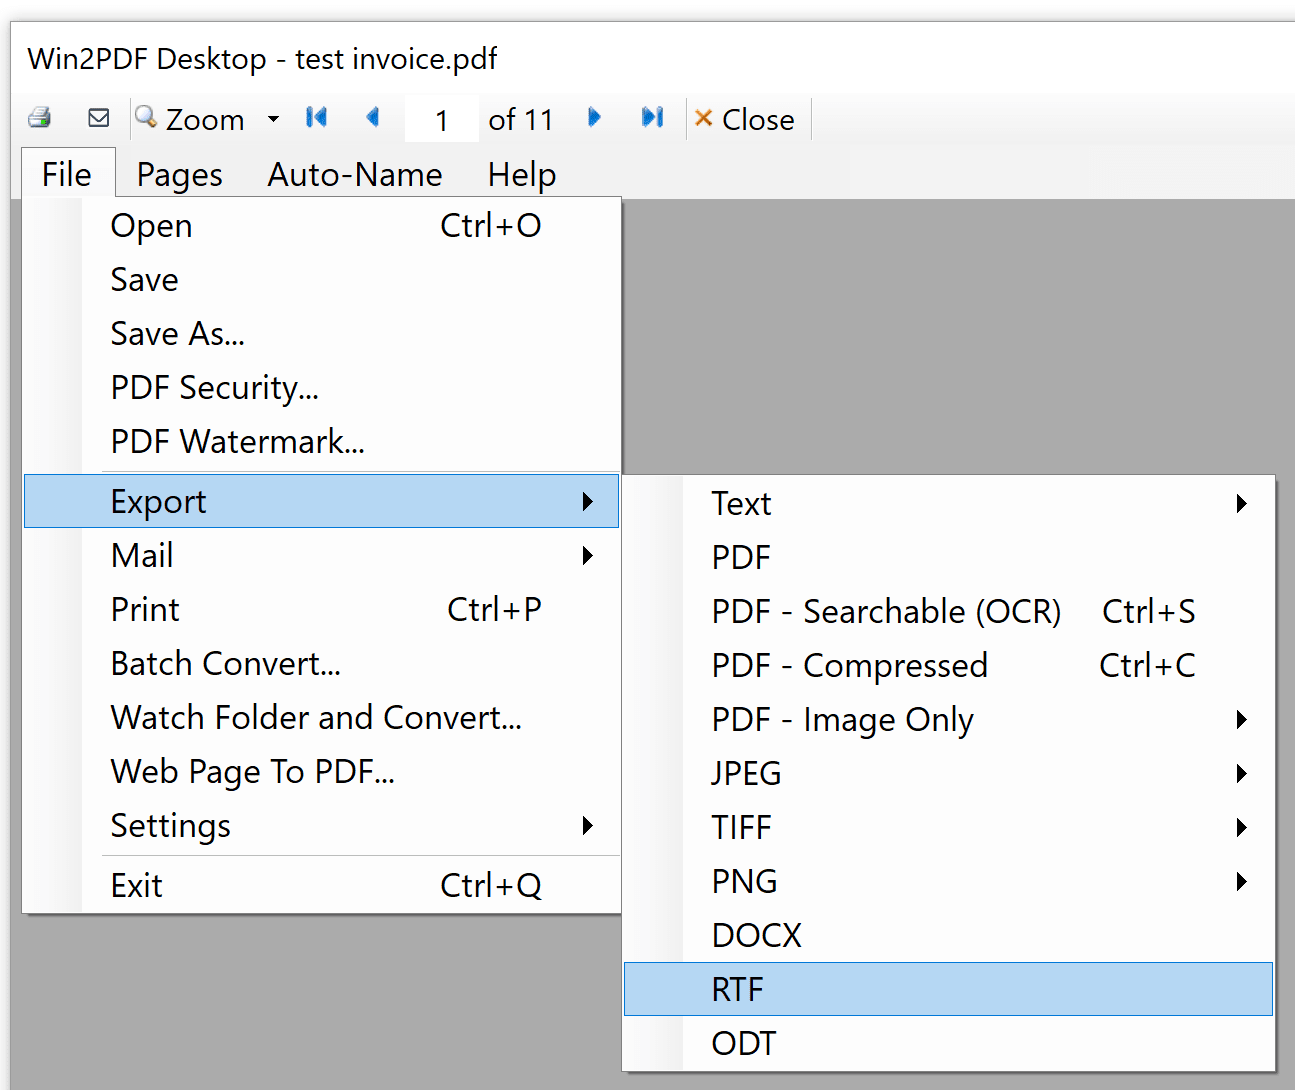 Win2PDF Desktop - Export PDF to RTF